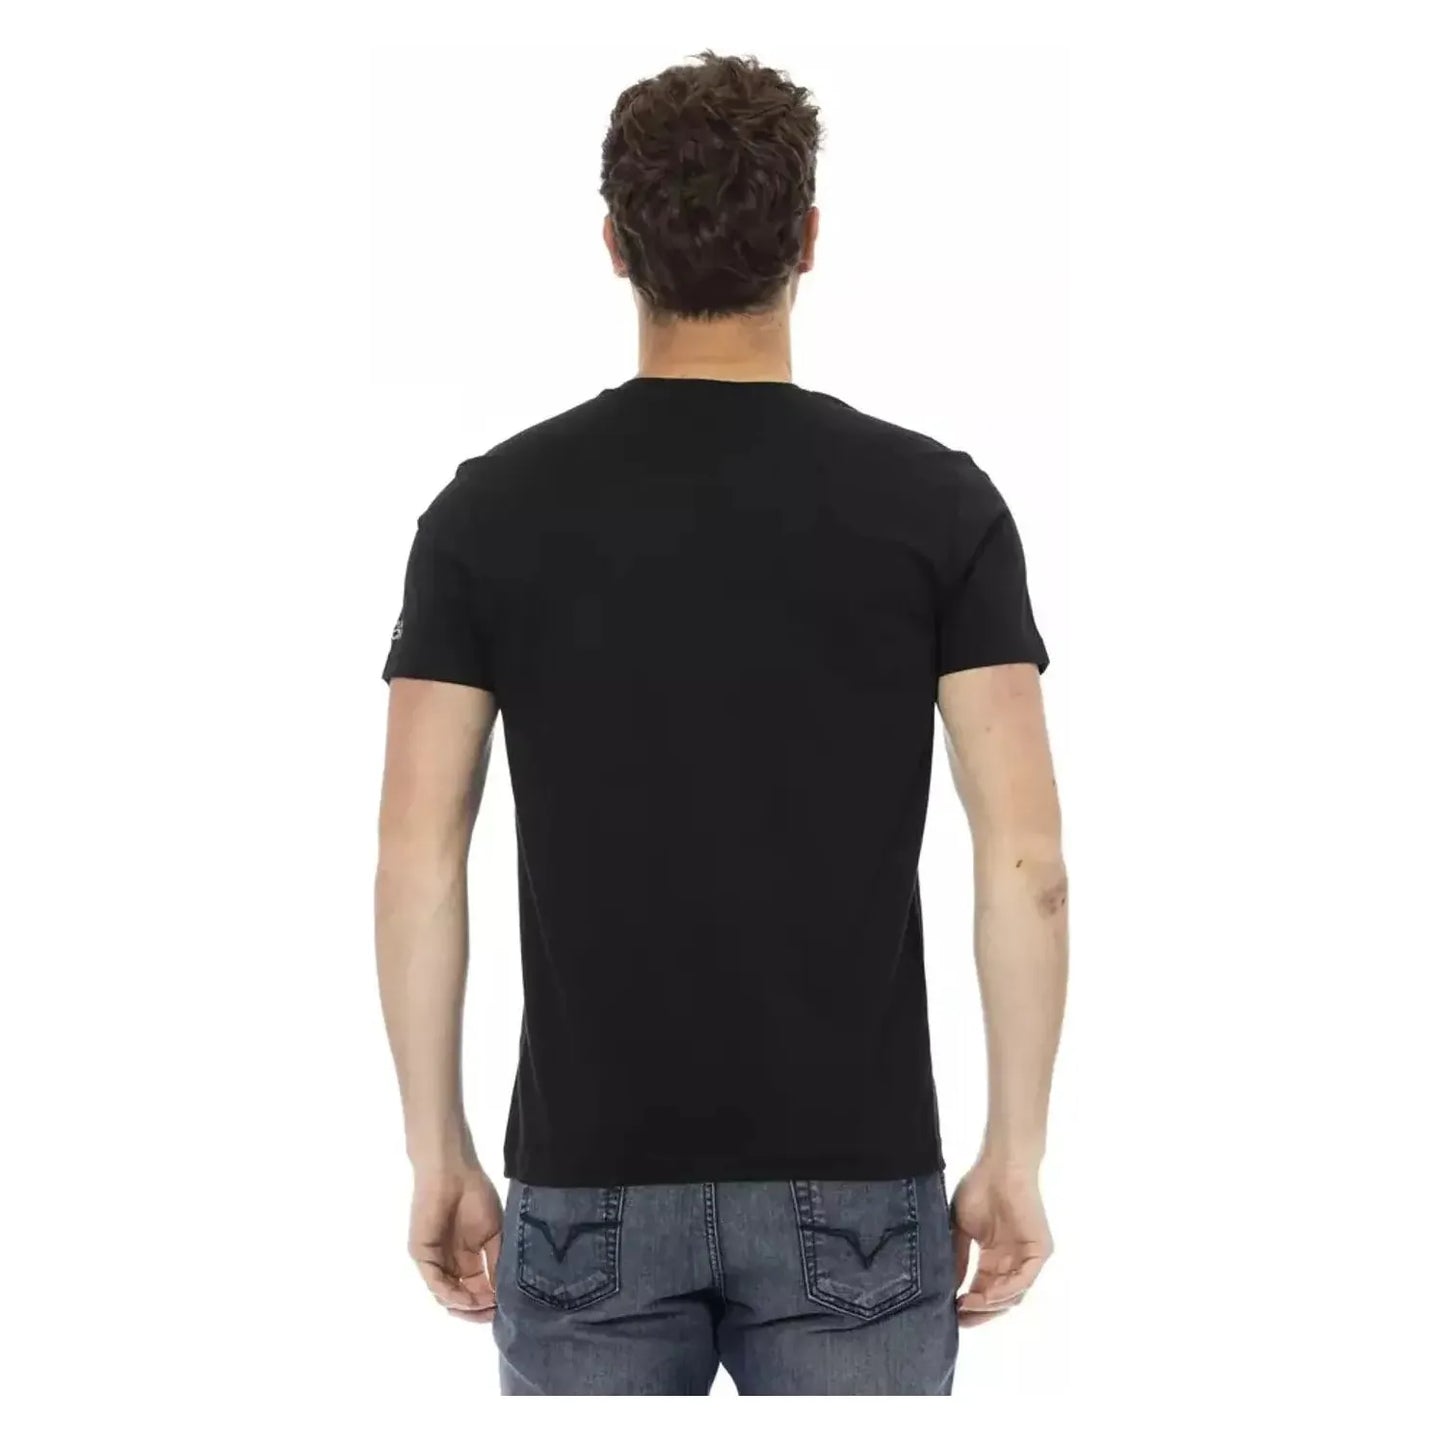 Trussardi Action Elegant Black Round Neck Tee with Unique Print black-cotton-t-shirt-58